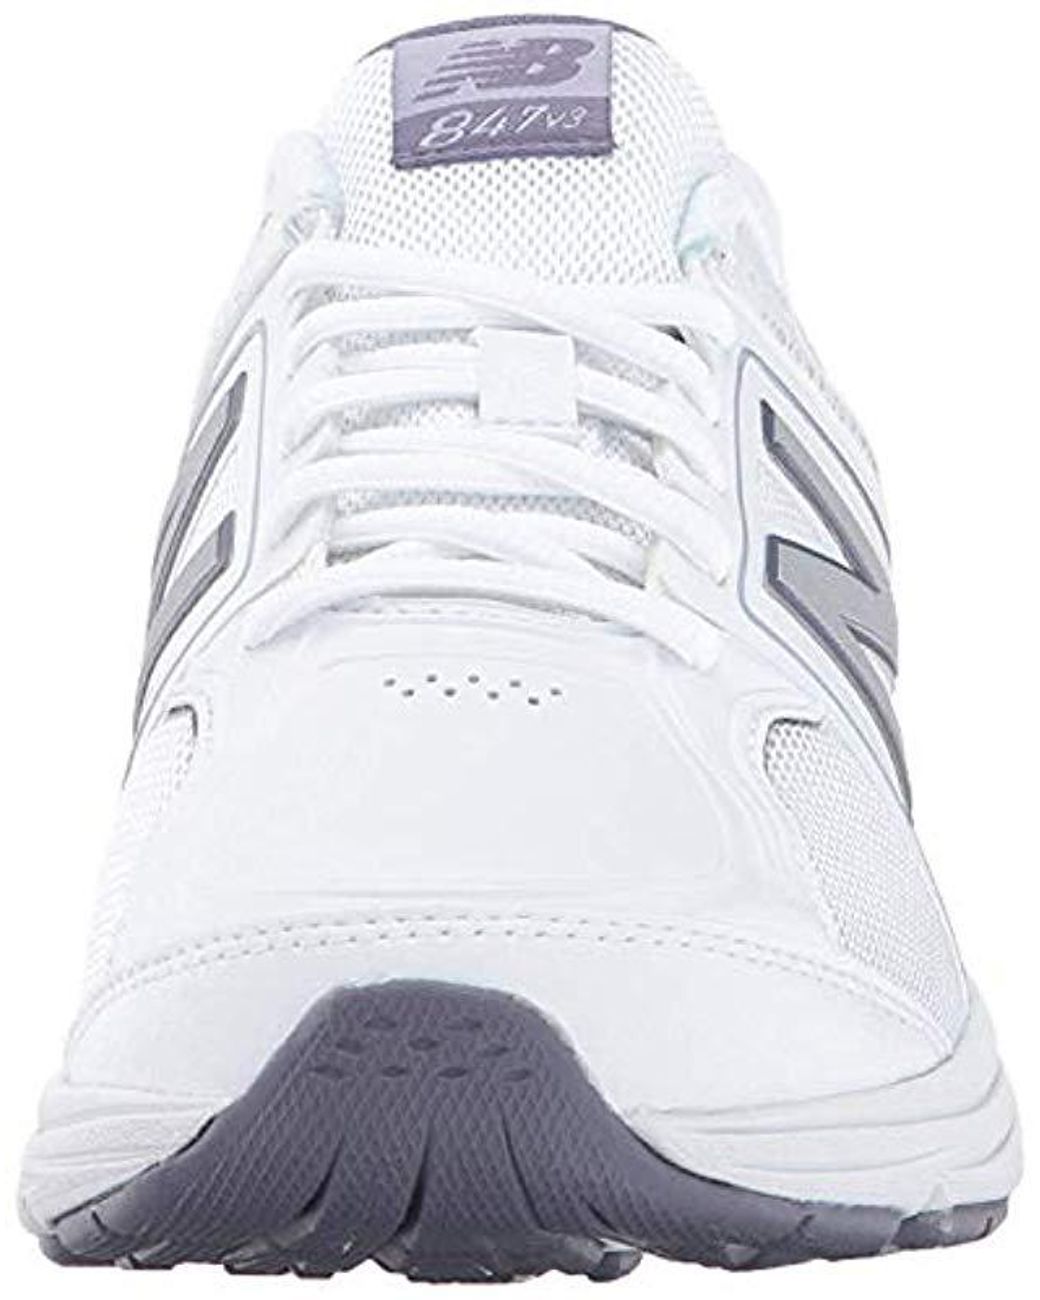 New Balance 847v3 Walking Shoe in White/Grey (White) | Lyst